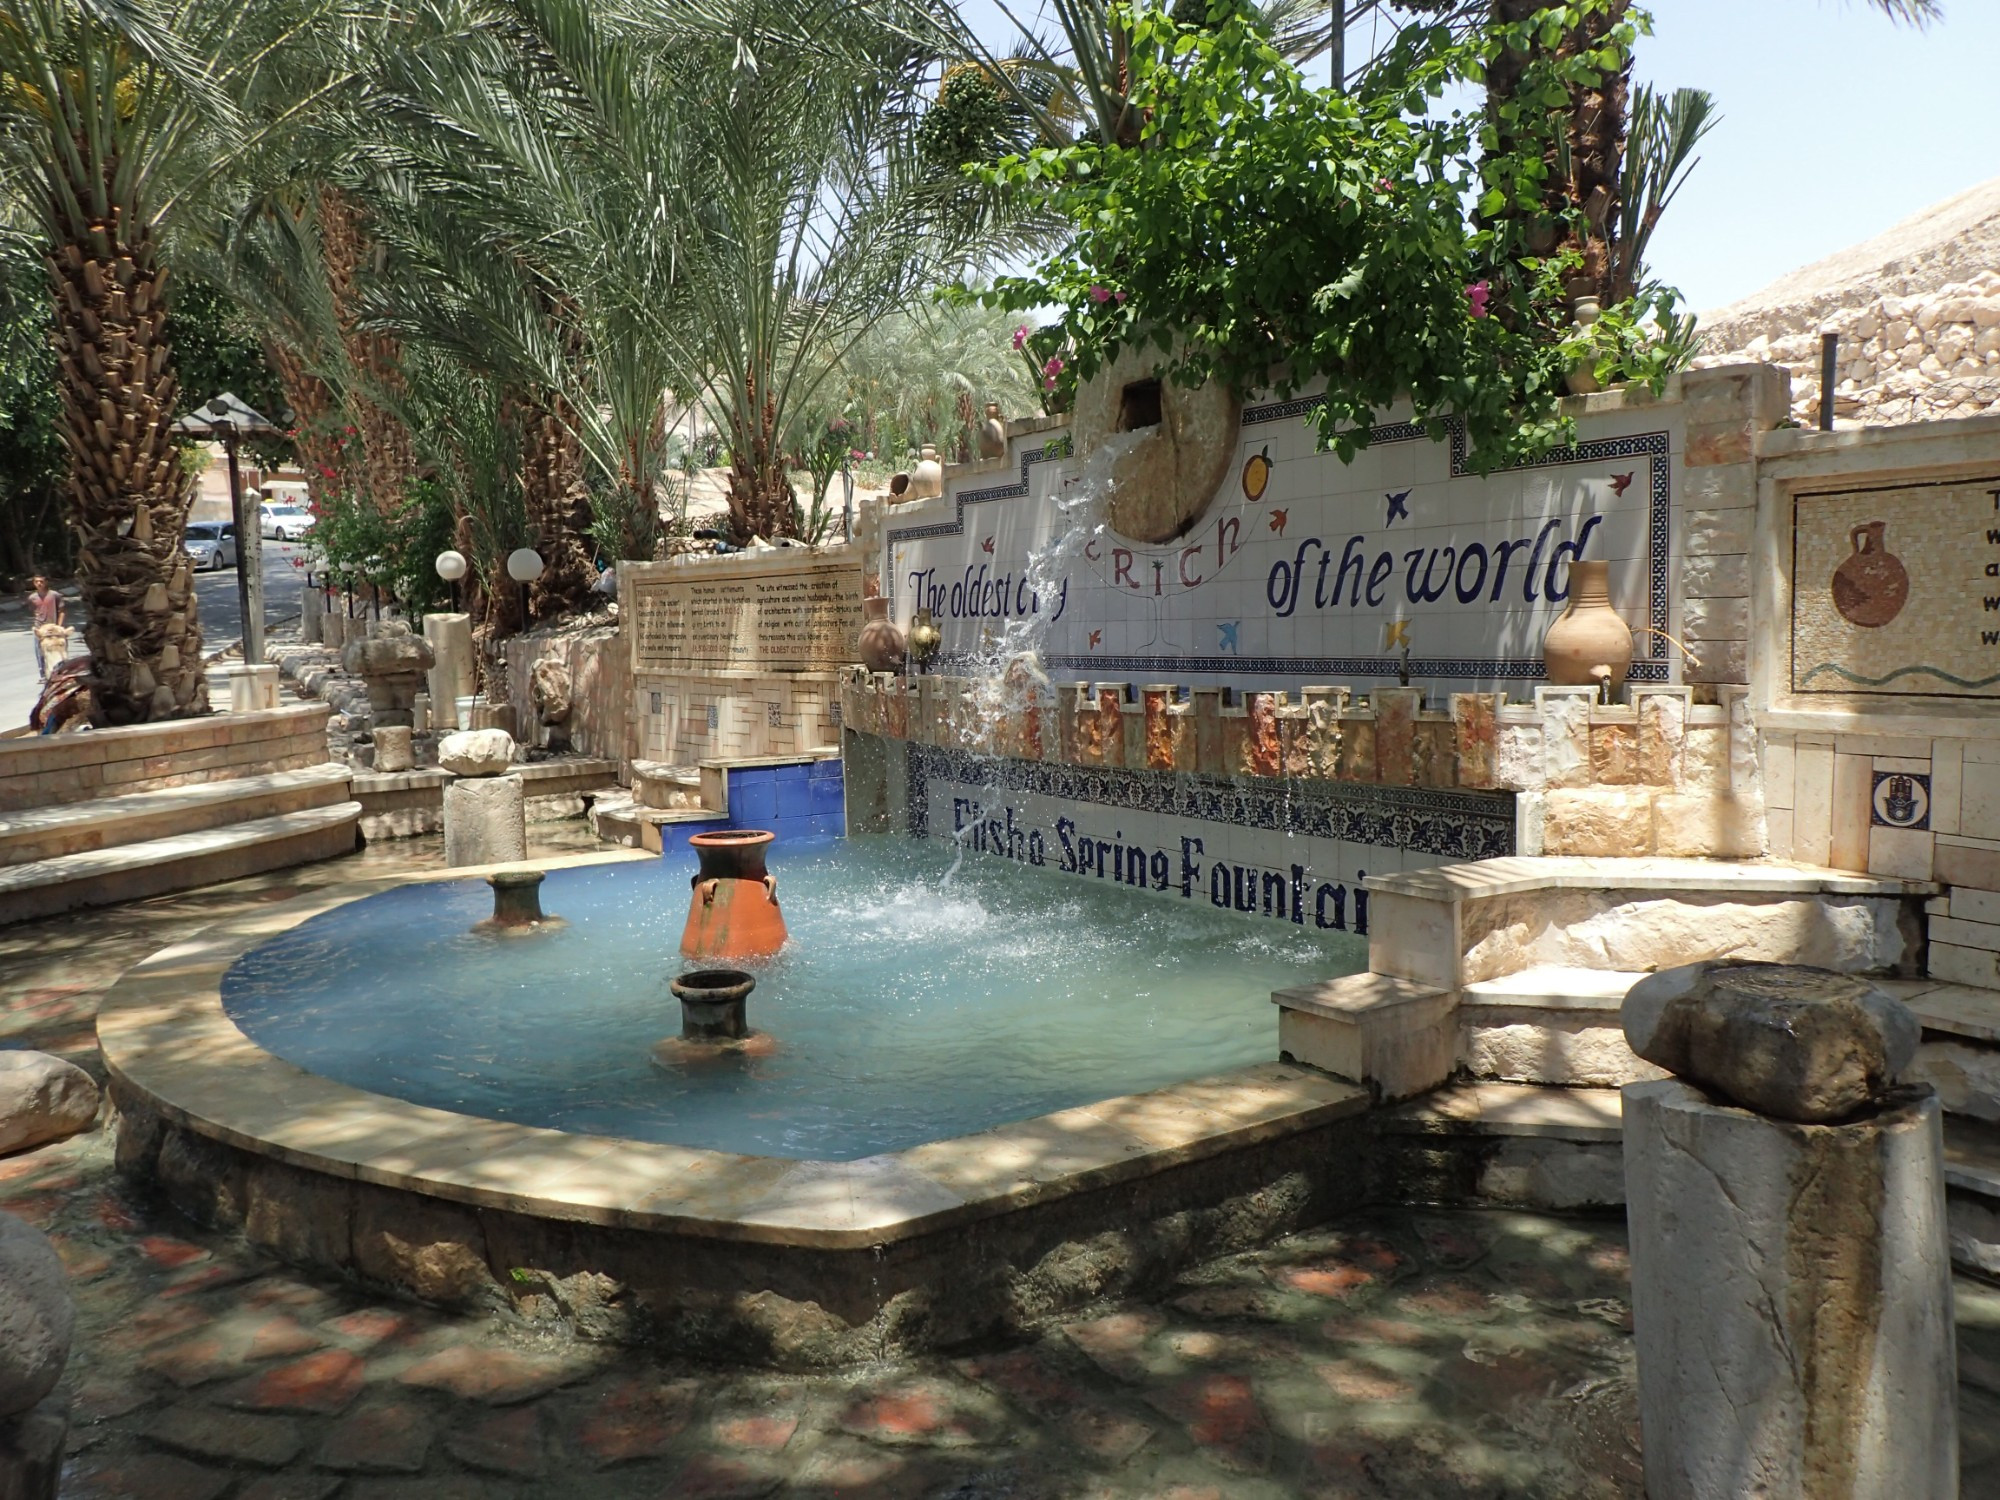 Elisha Spring Fountain, Palestine